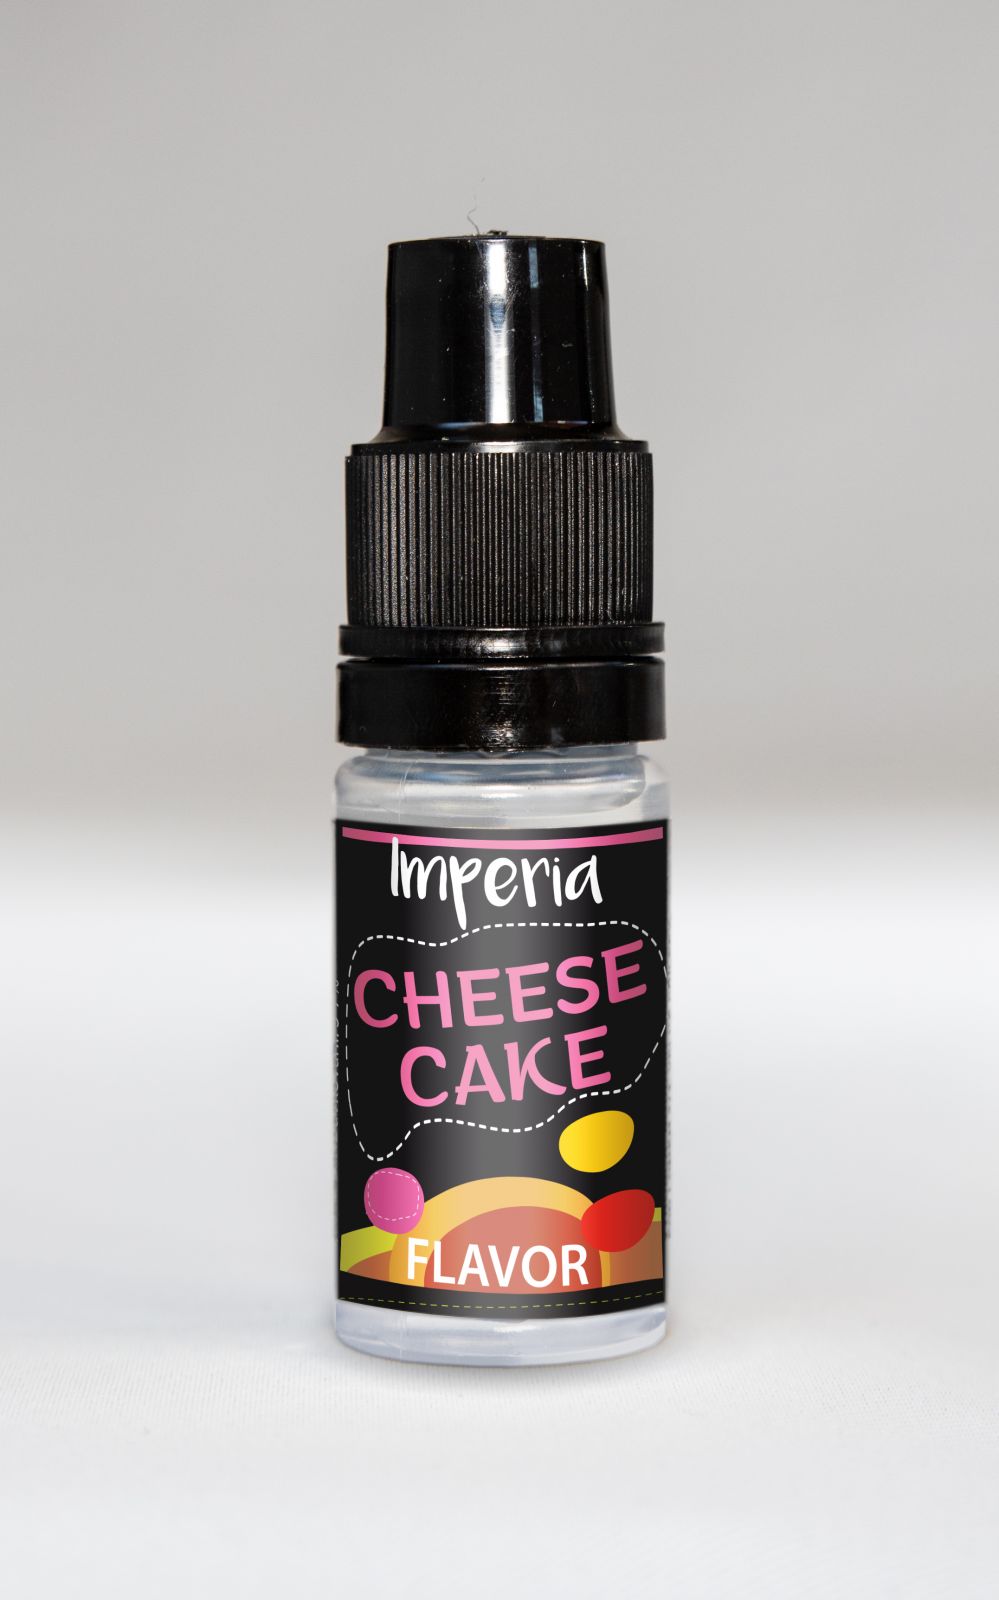 CHEESE CAKE / Tvarohový cheesecake - Aroma Imperia Black Label Boudoir Samadhi s.r.o.